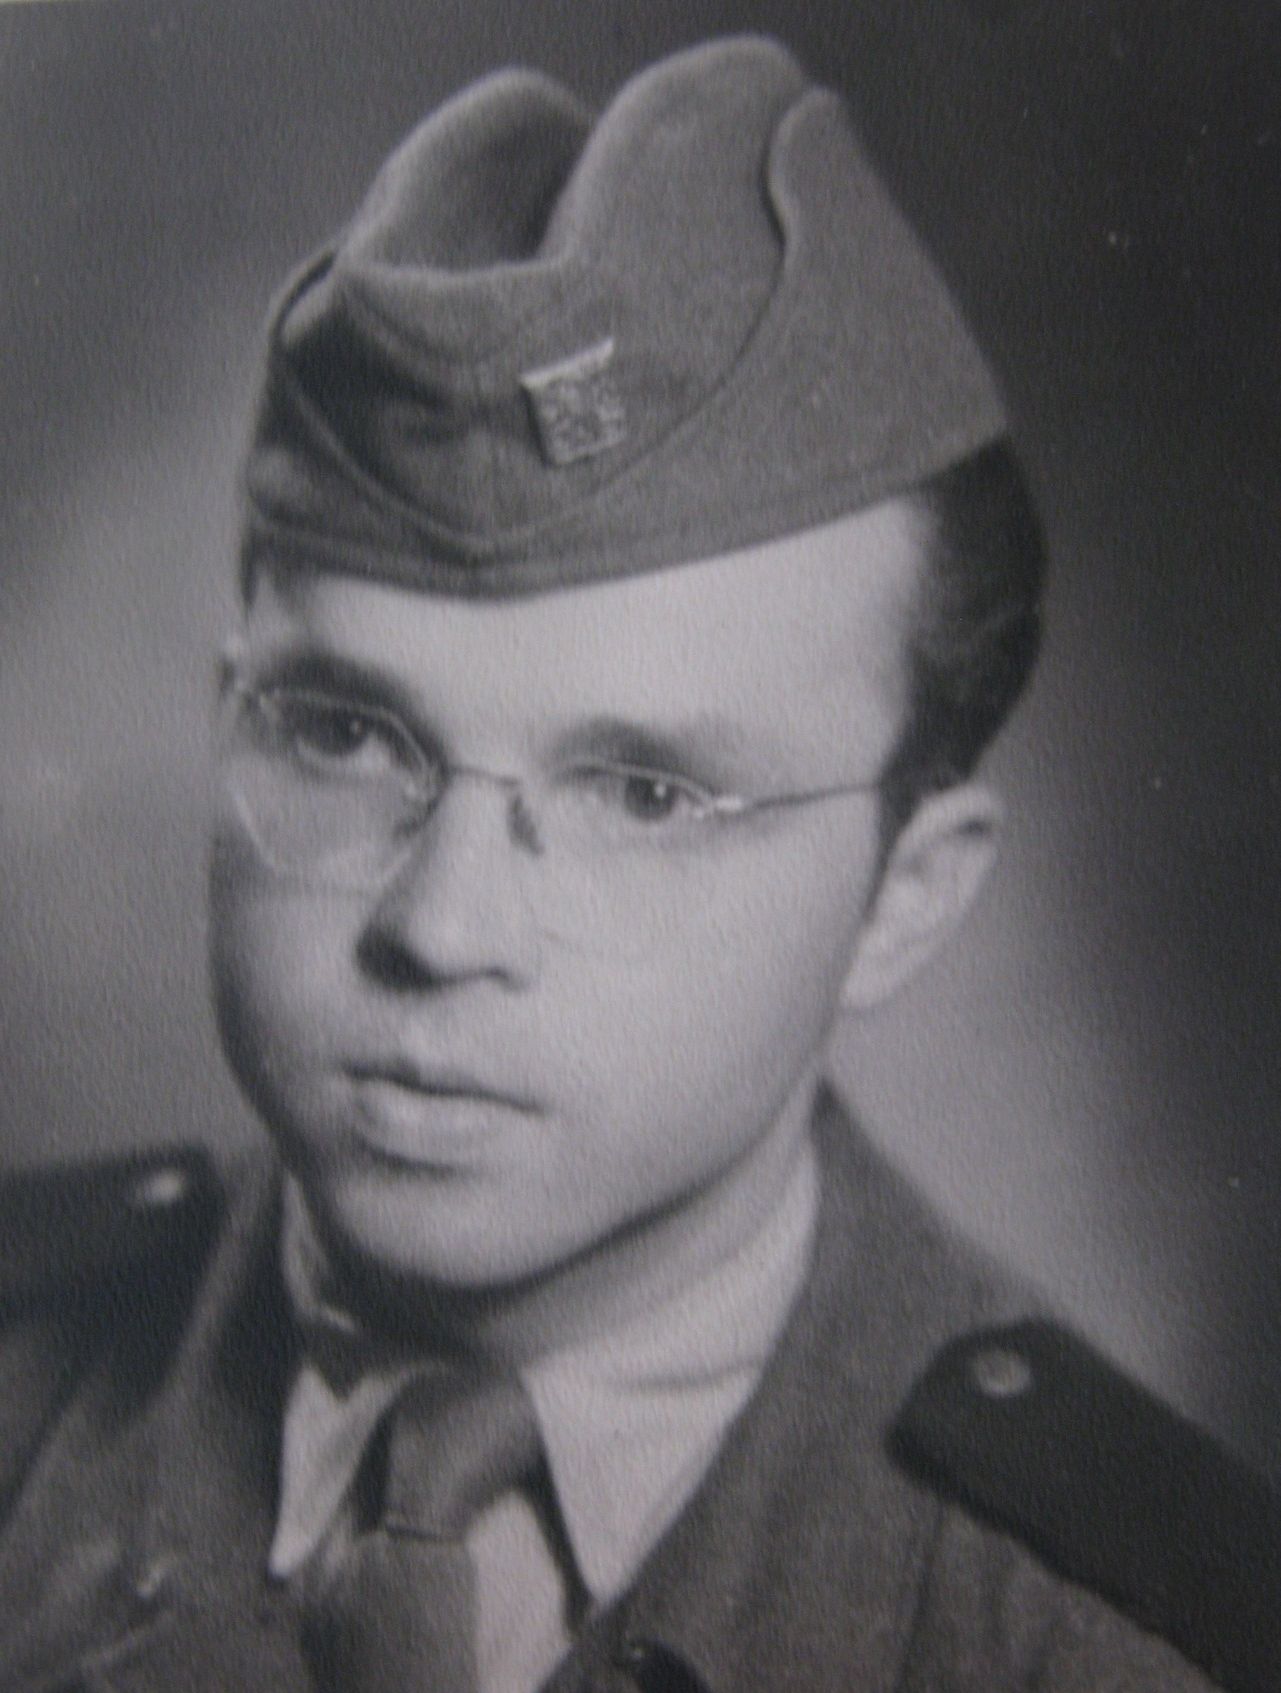 František Lhotský as a soldier of the Czechoslovak People's Army in the 1950s